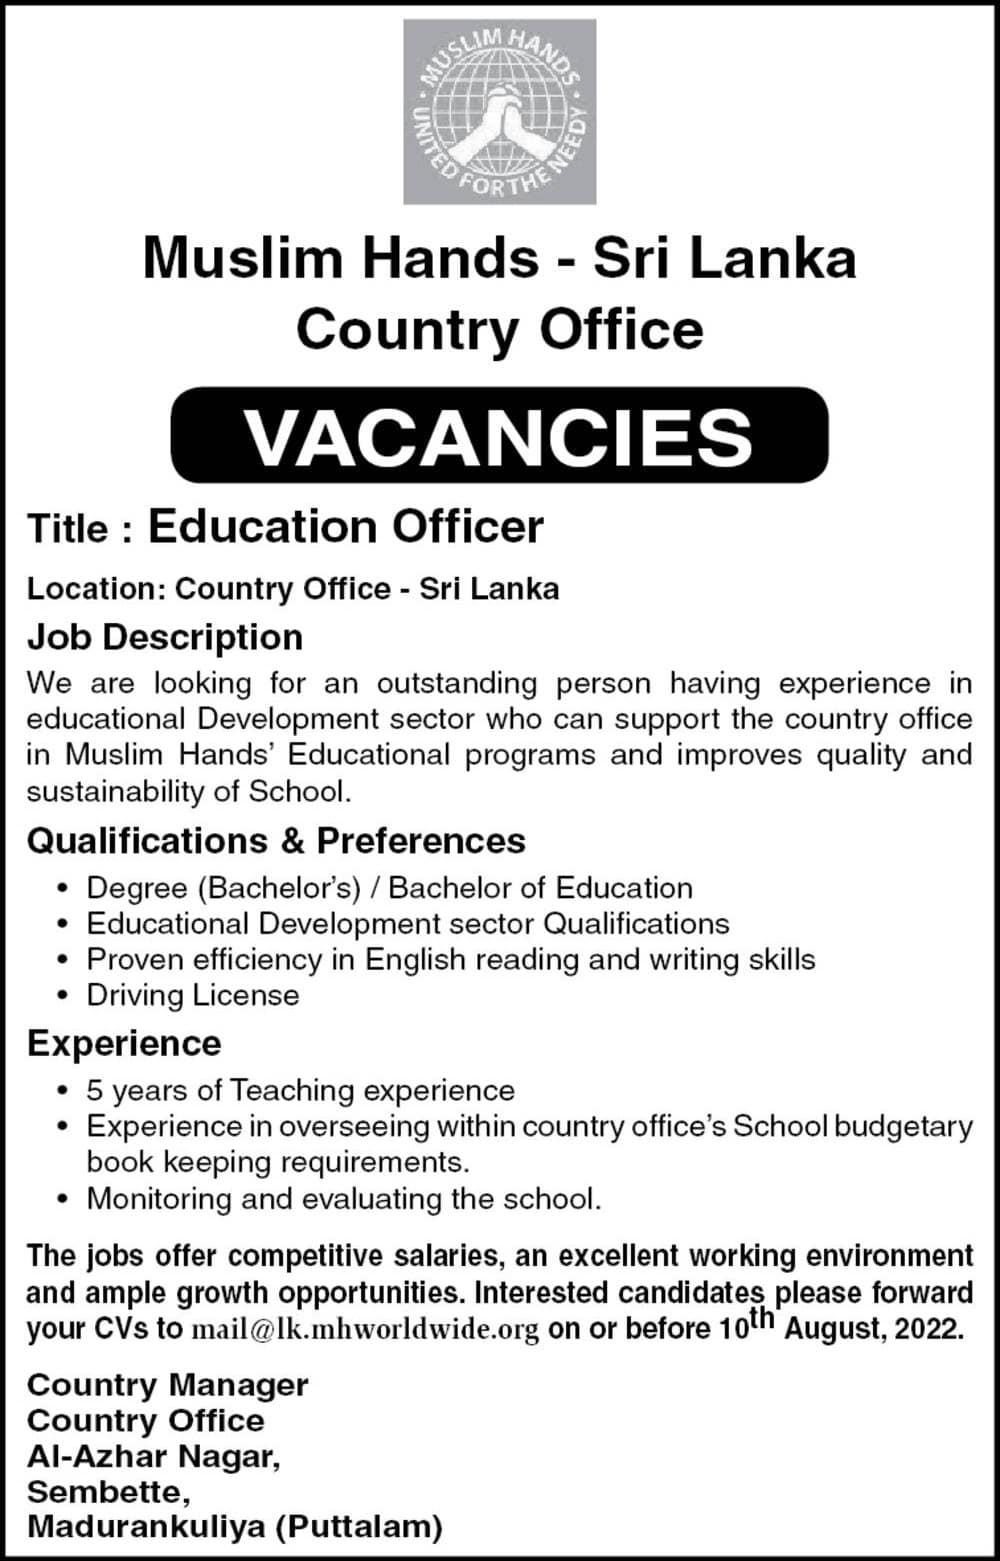 Education Officer Job Vacancy - Muslim Hands Sri Lanka Jobs Vacancies